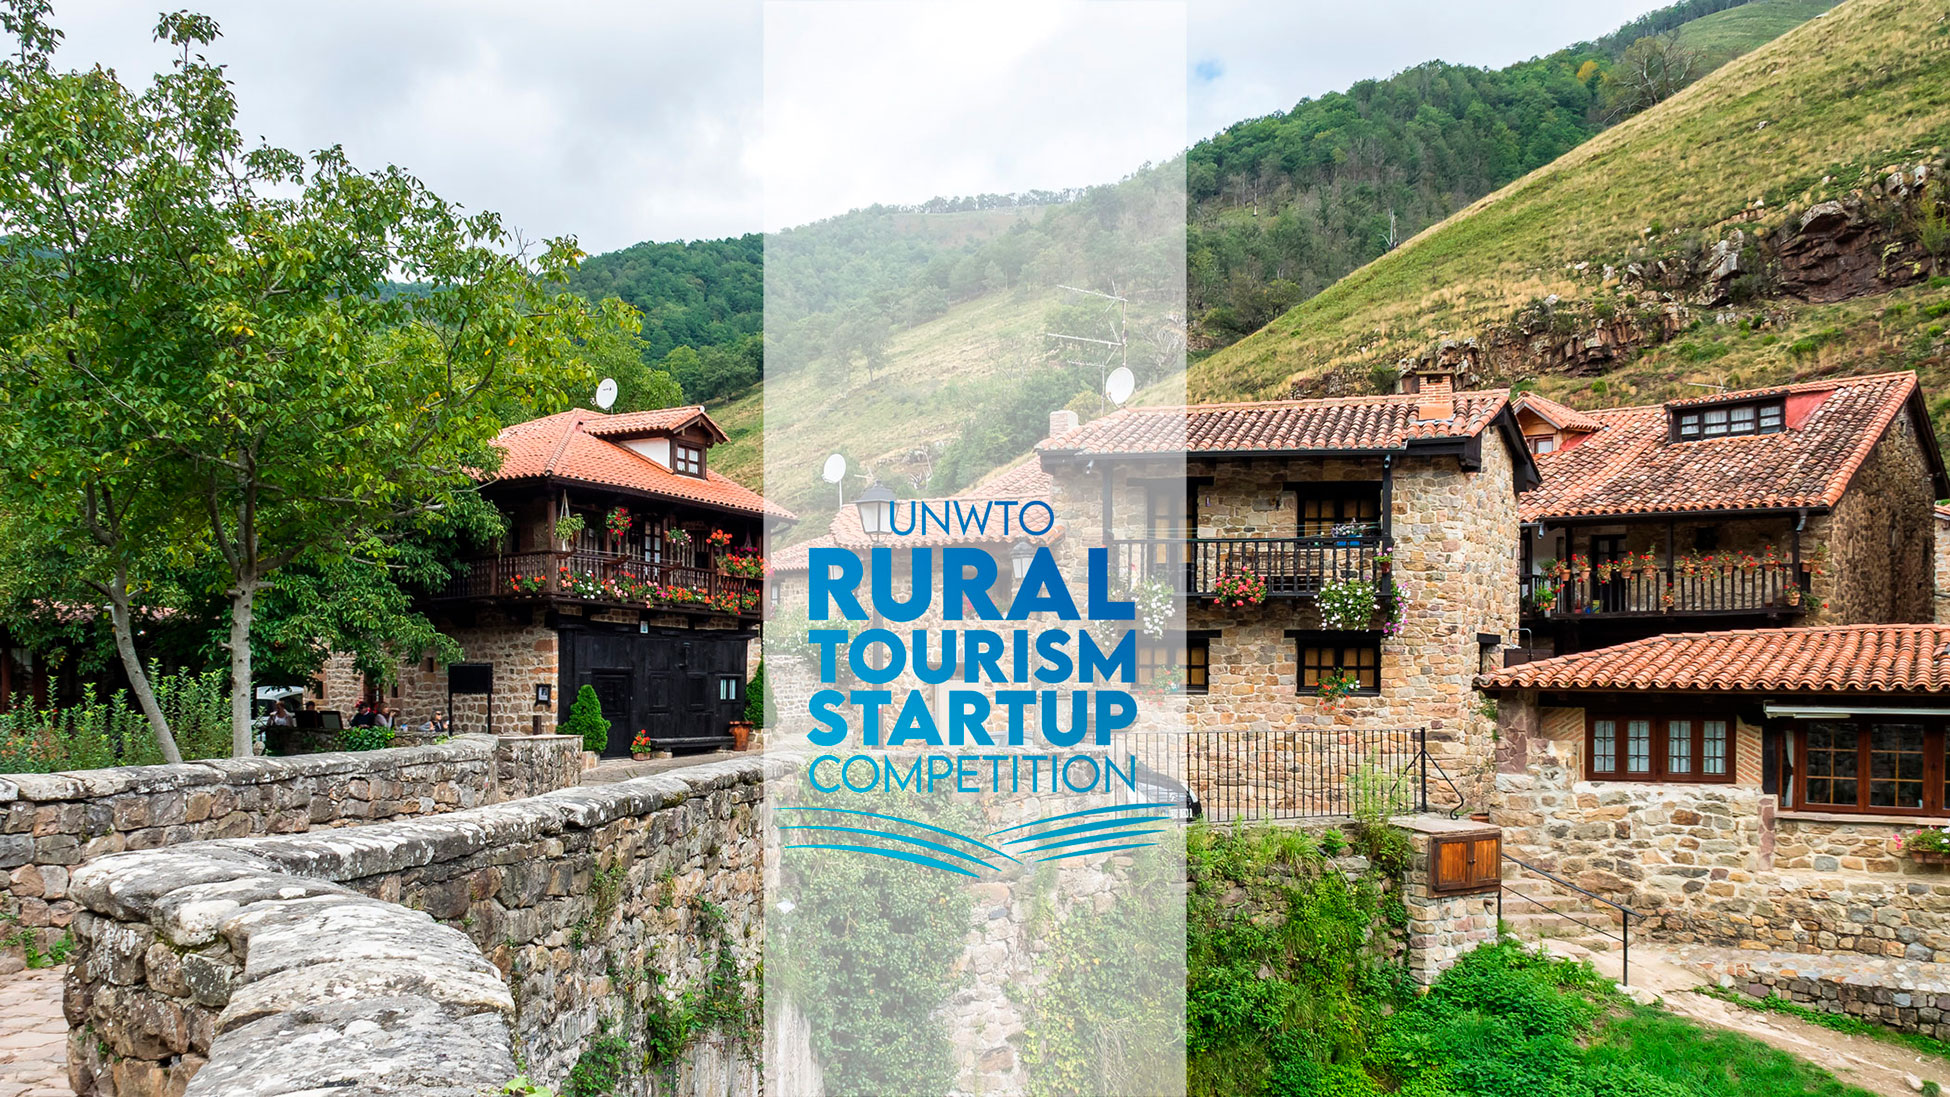 Competición para startups de turismo rural